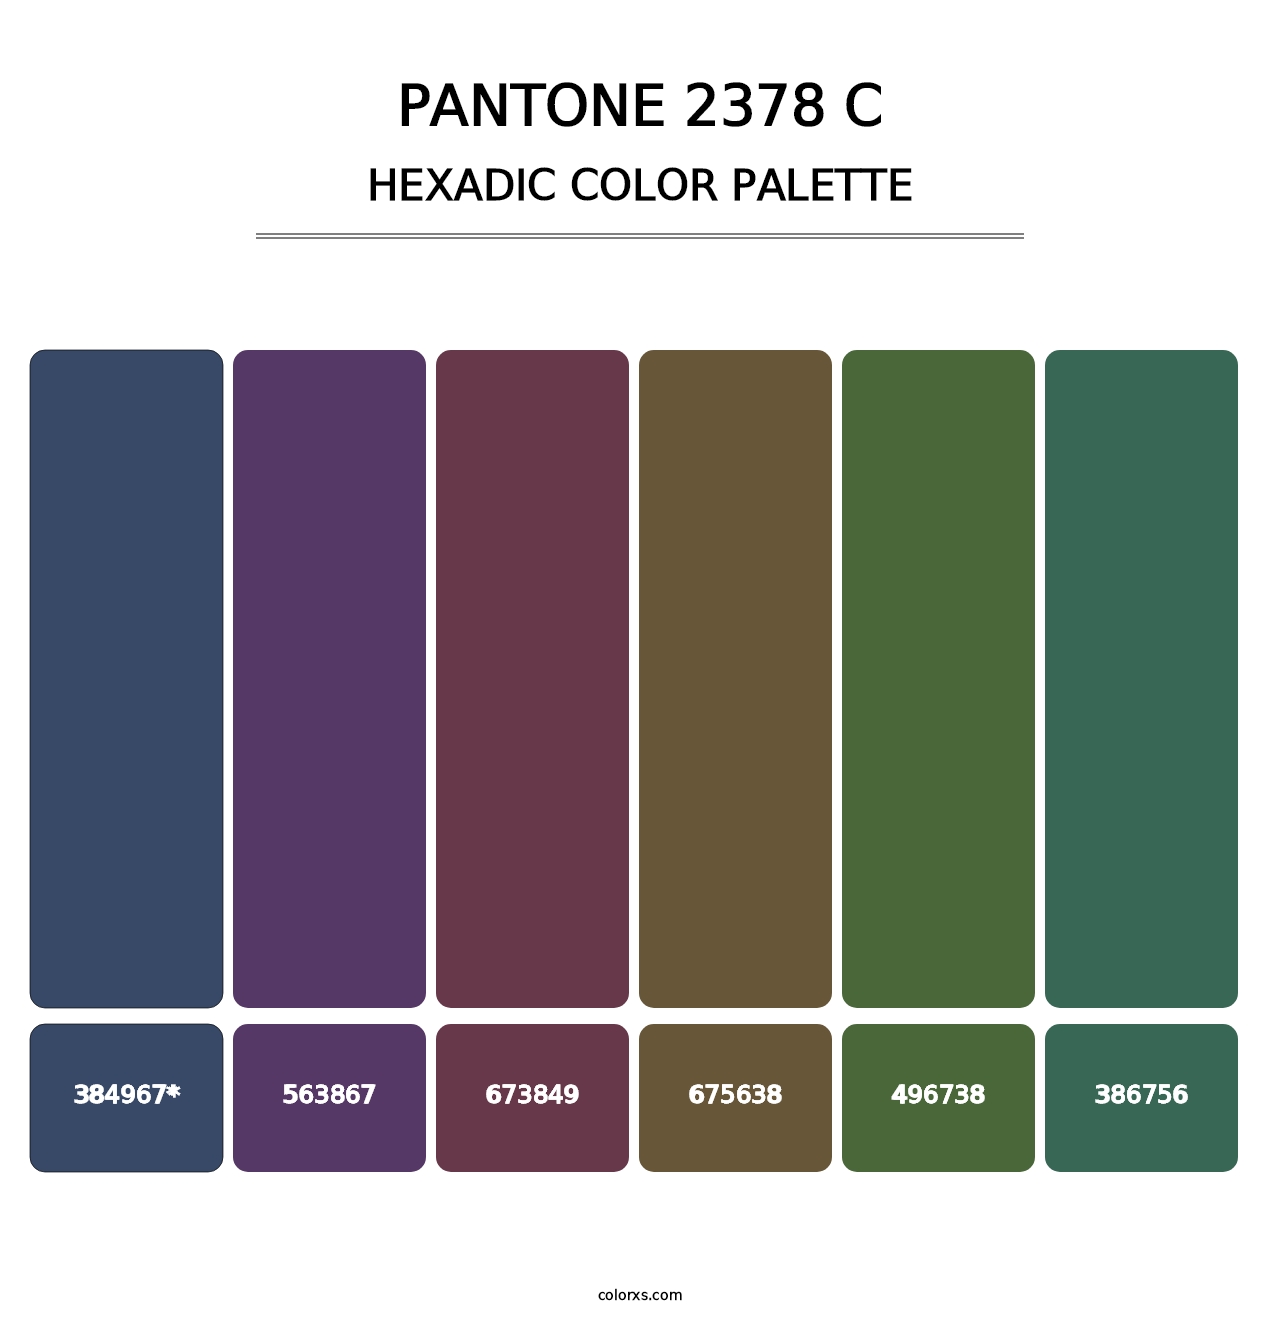 PANTONE 2378 C - Hexadic Color Palette